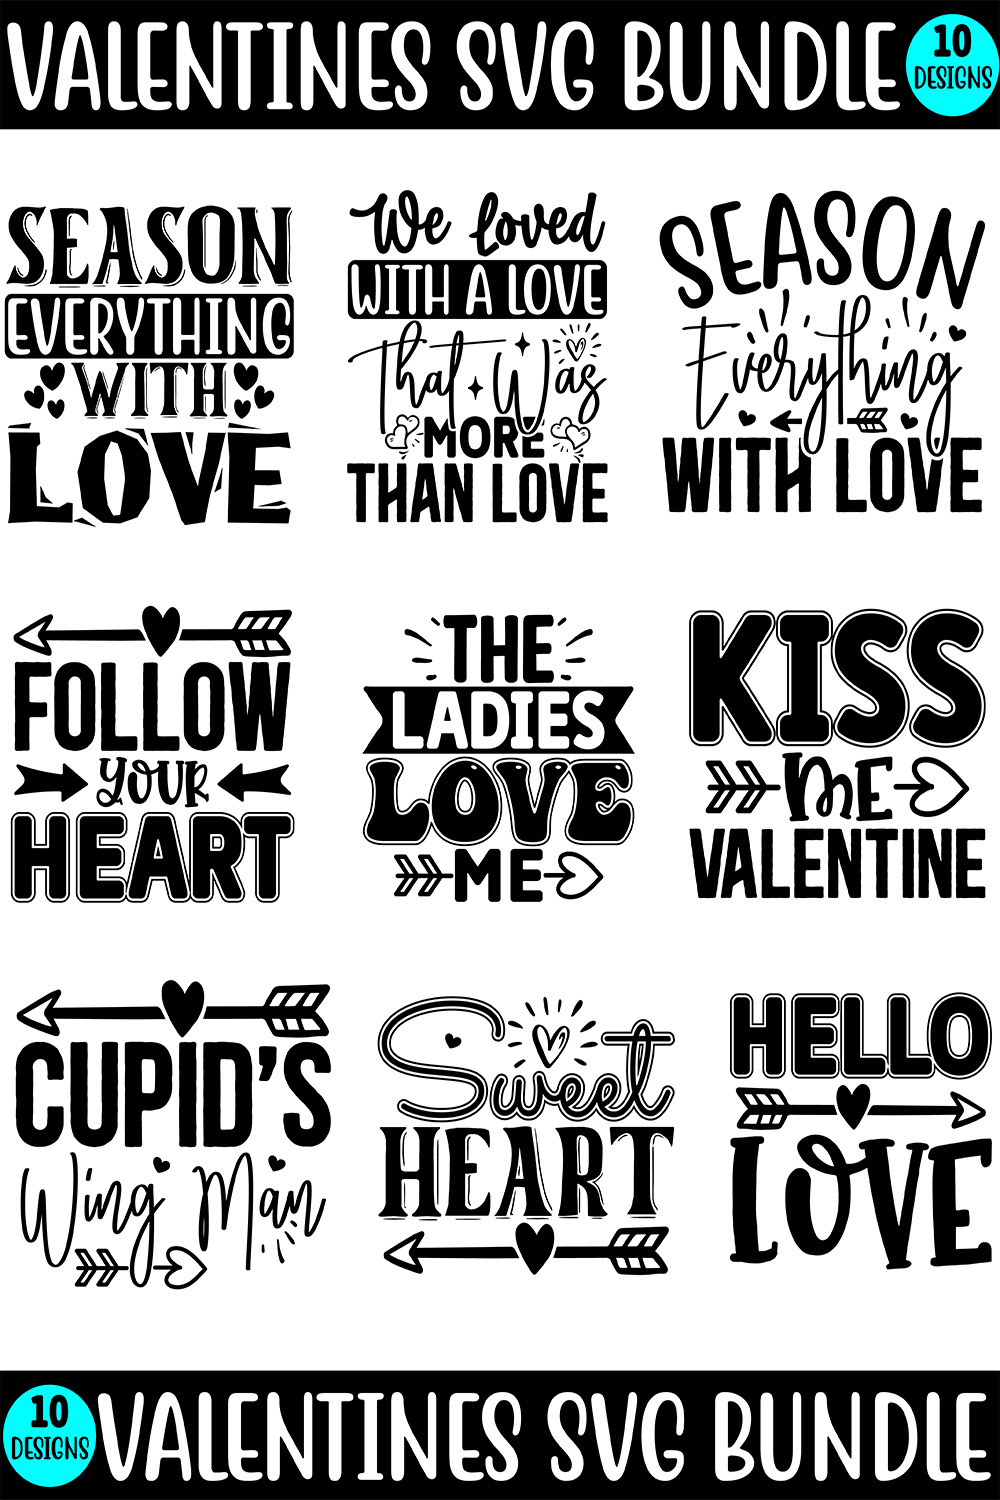 Valentines SVG Quotes Design Bundle pinterest image.